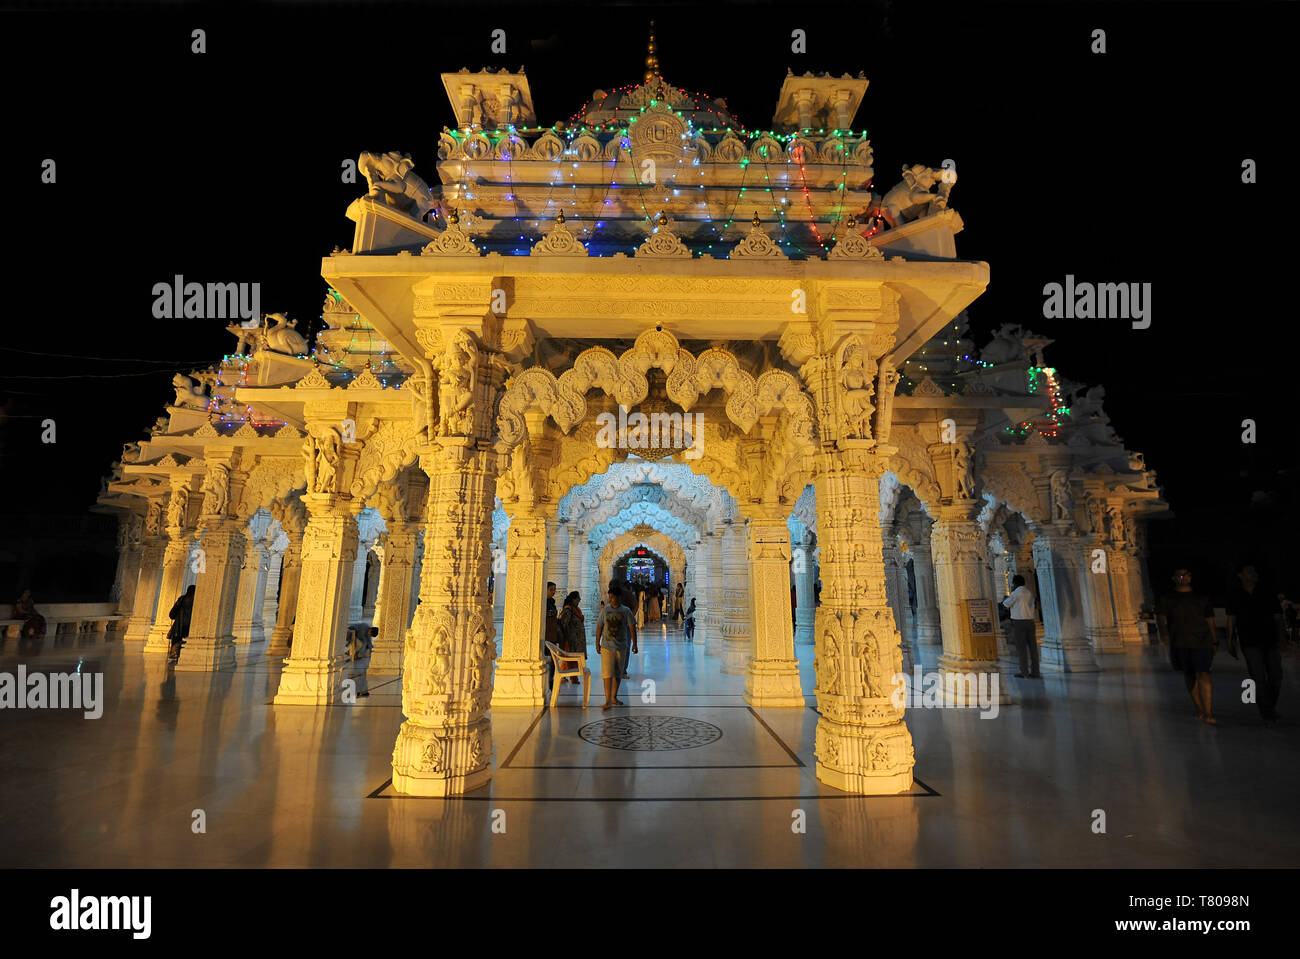 Entrance to the beautiful white marble Swaminarayan Temple, illuminated for evening prayers, Mandvi, Gujarat, India, Asia Stock Photo